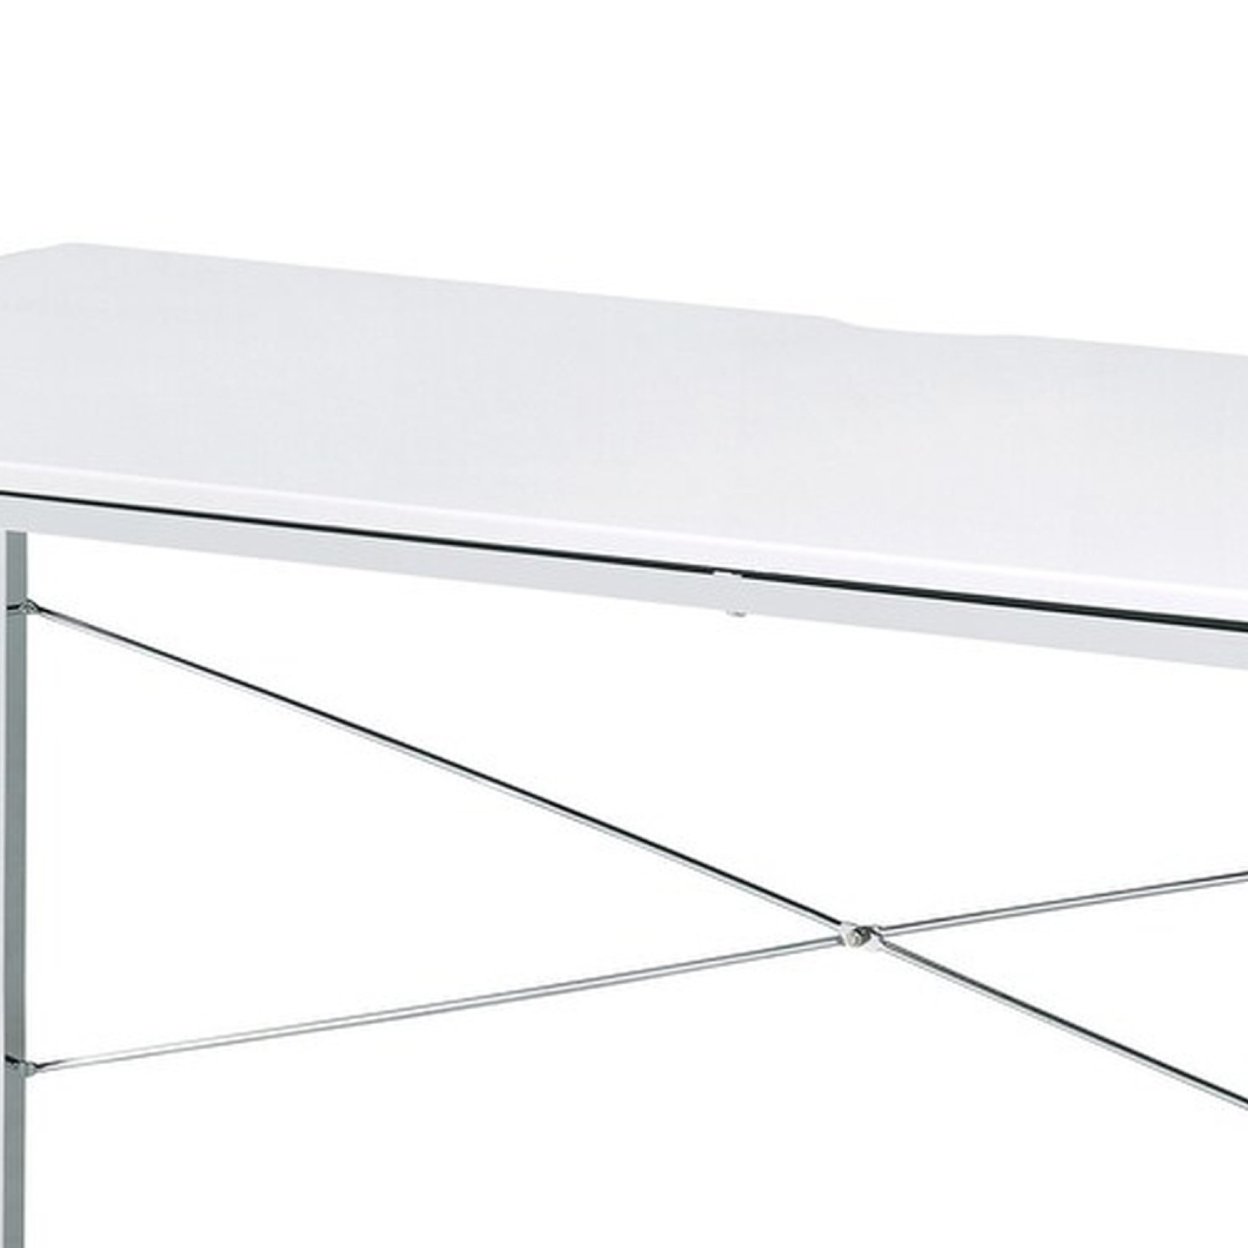 Mayo 47 Inch Rectangular Desk Console Table, Crossed Bars, White, Chrome- Saltoro Sherpi